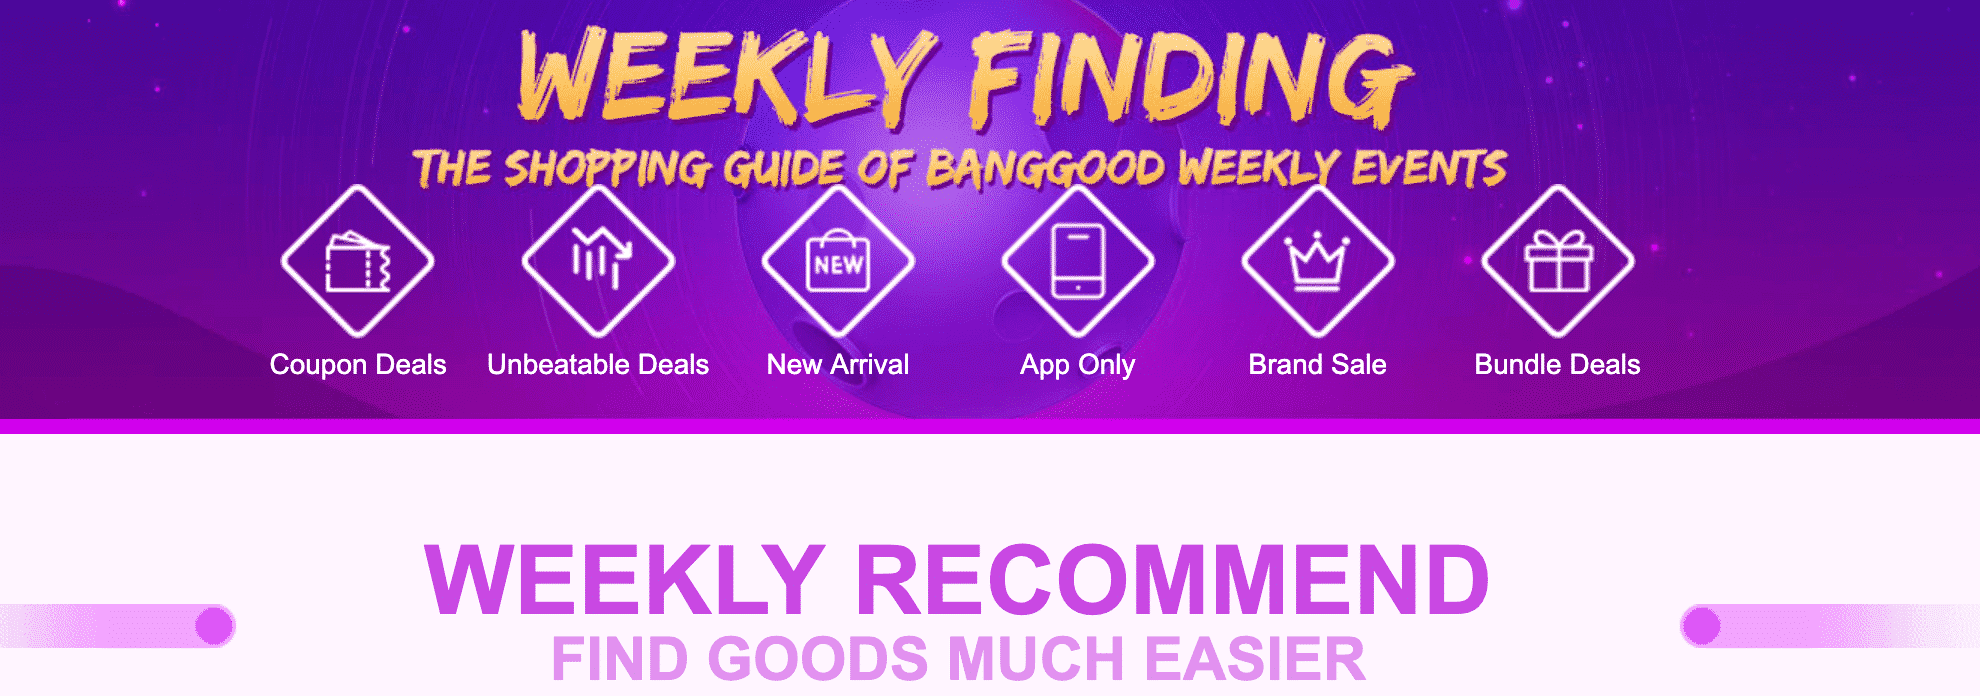 Banggood weekly deals